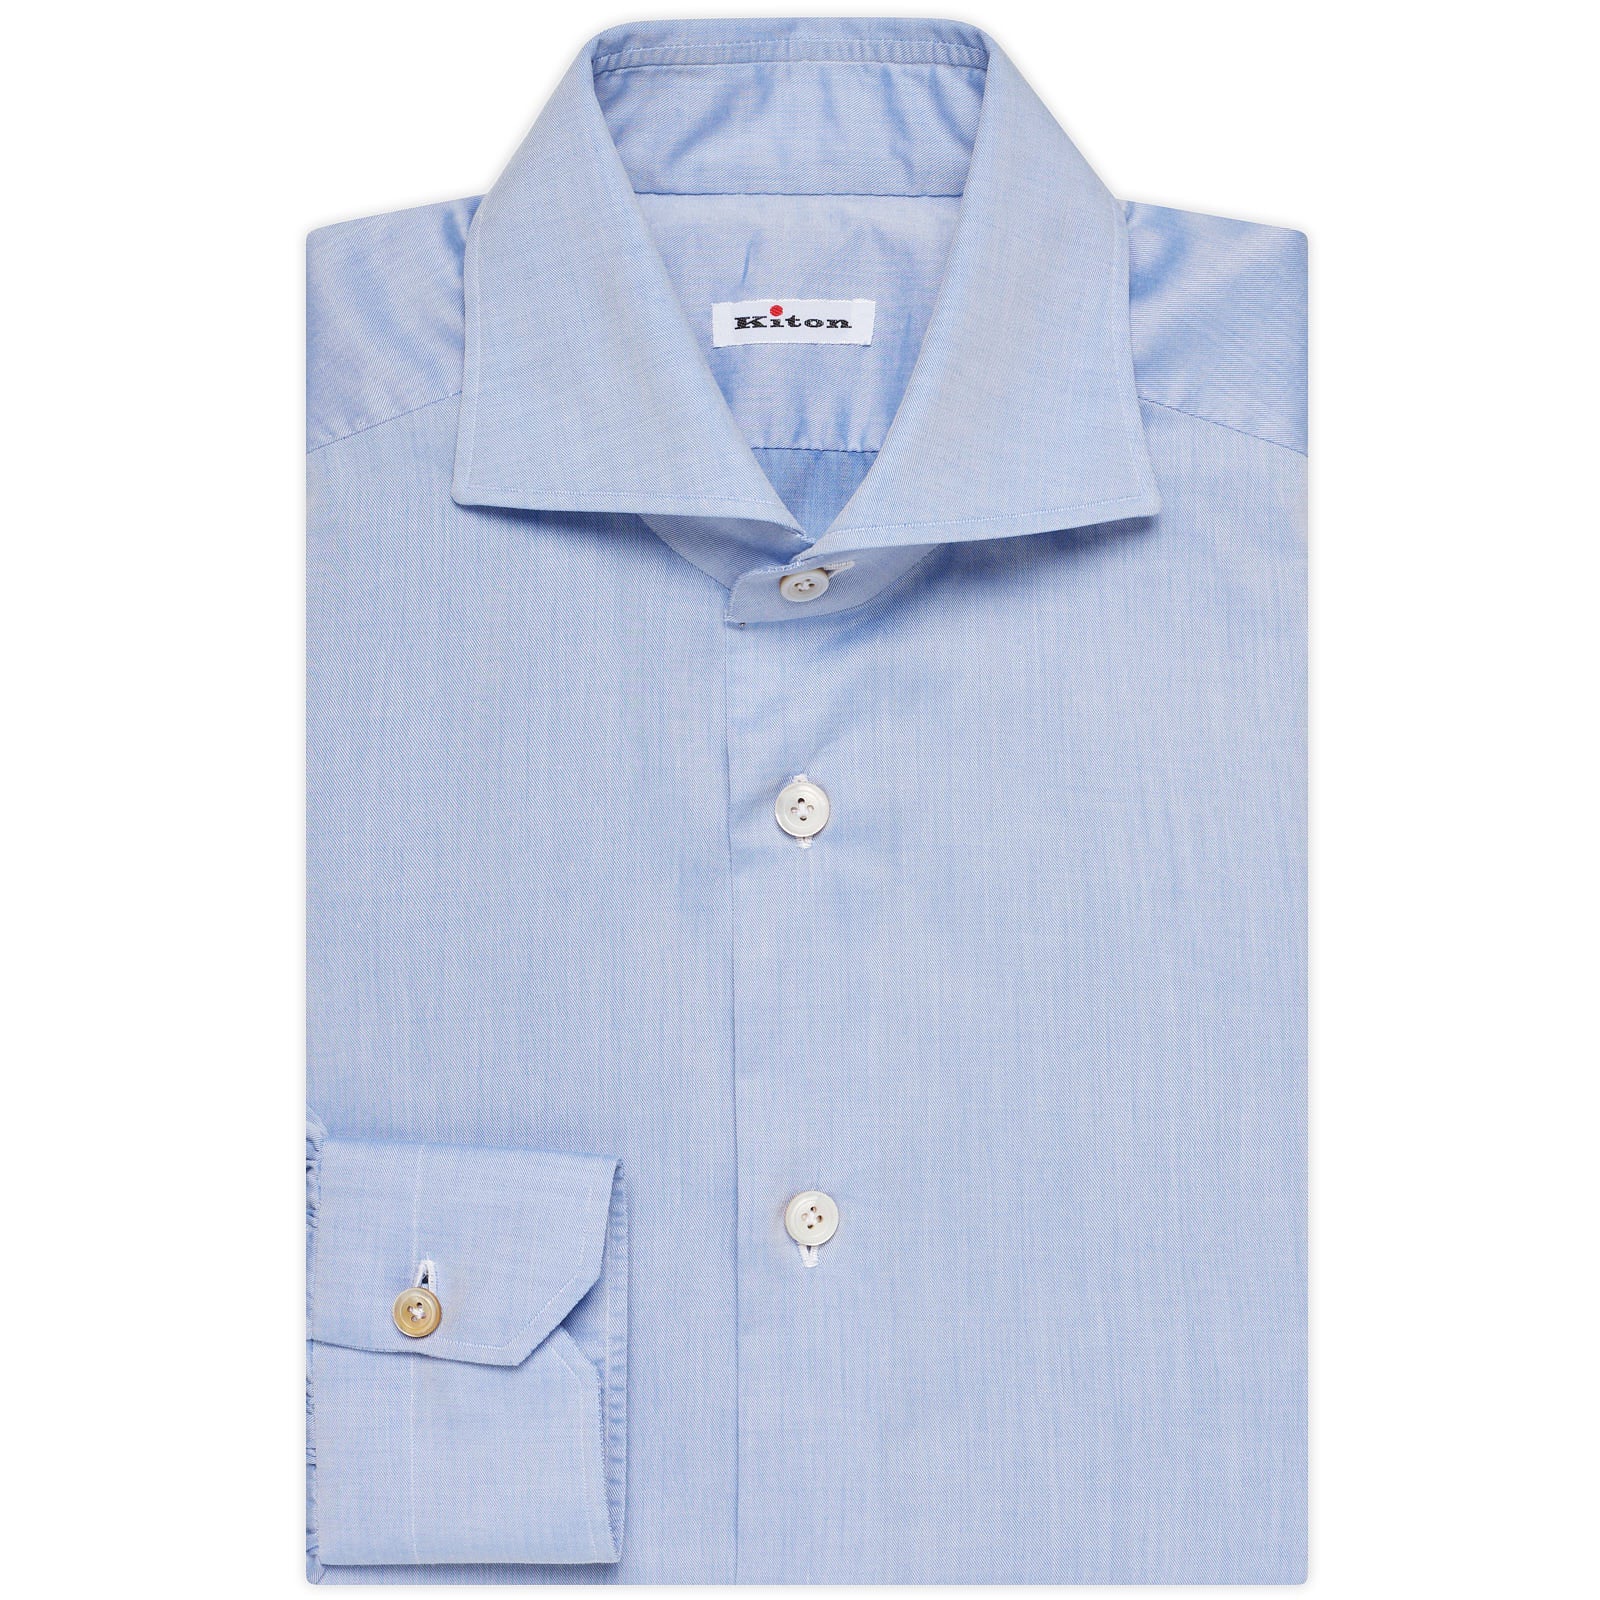 KITON Napoli Handmade Solid Blue Twill Cotton Dress Shirt EU 39 NEW US 15.5